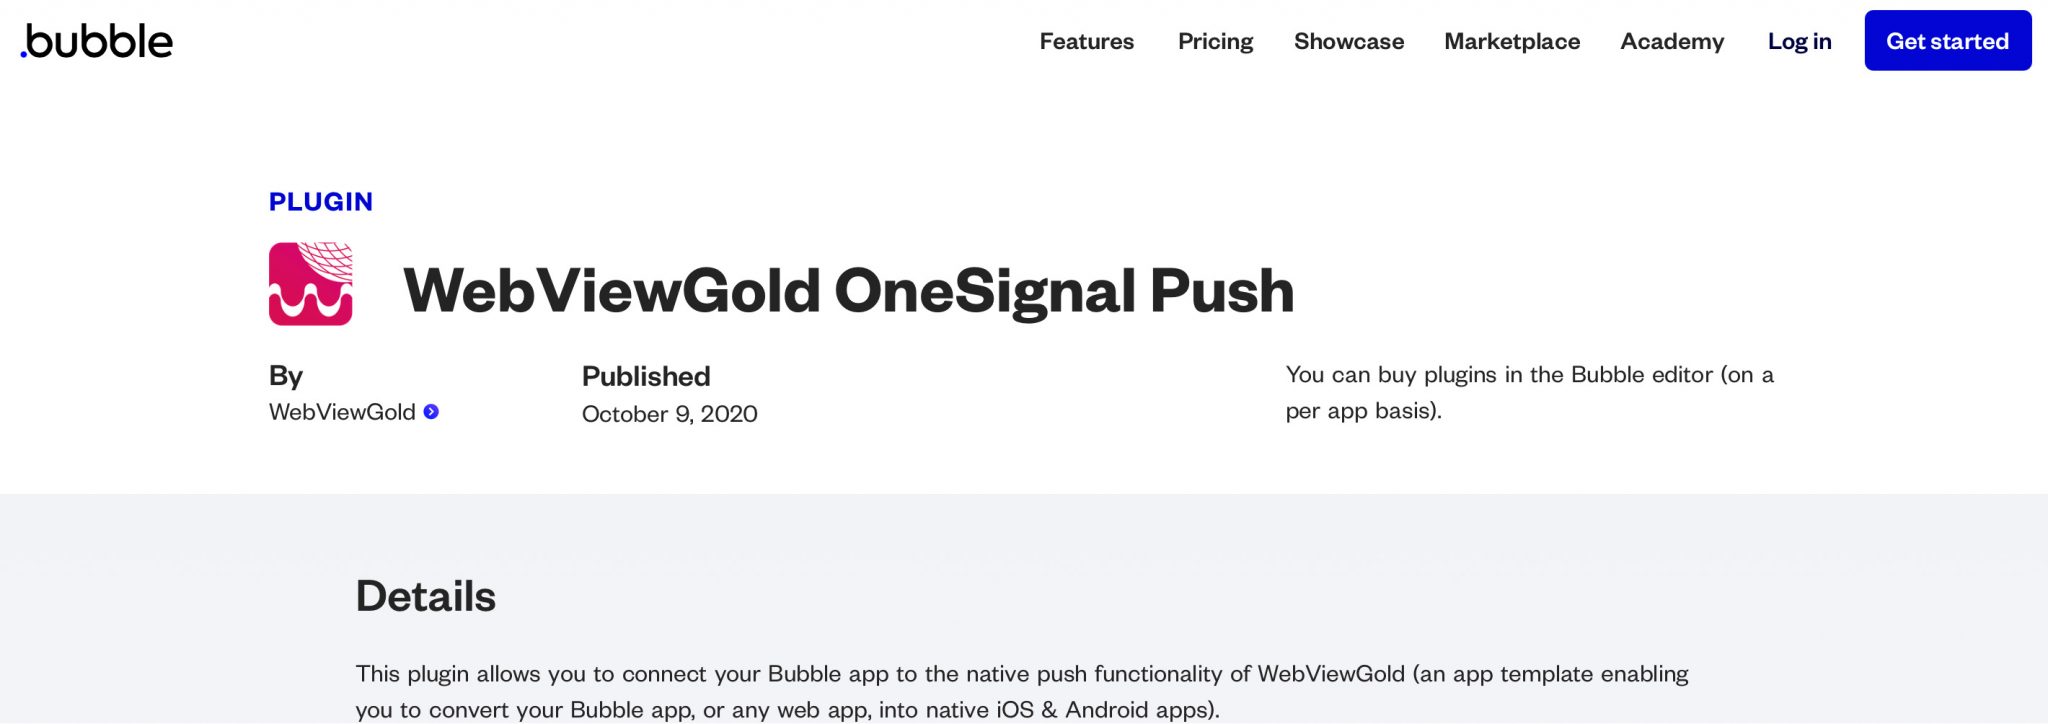 bubble.io WebViewGold OneSignal Push plugin